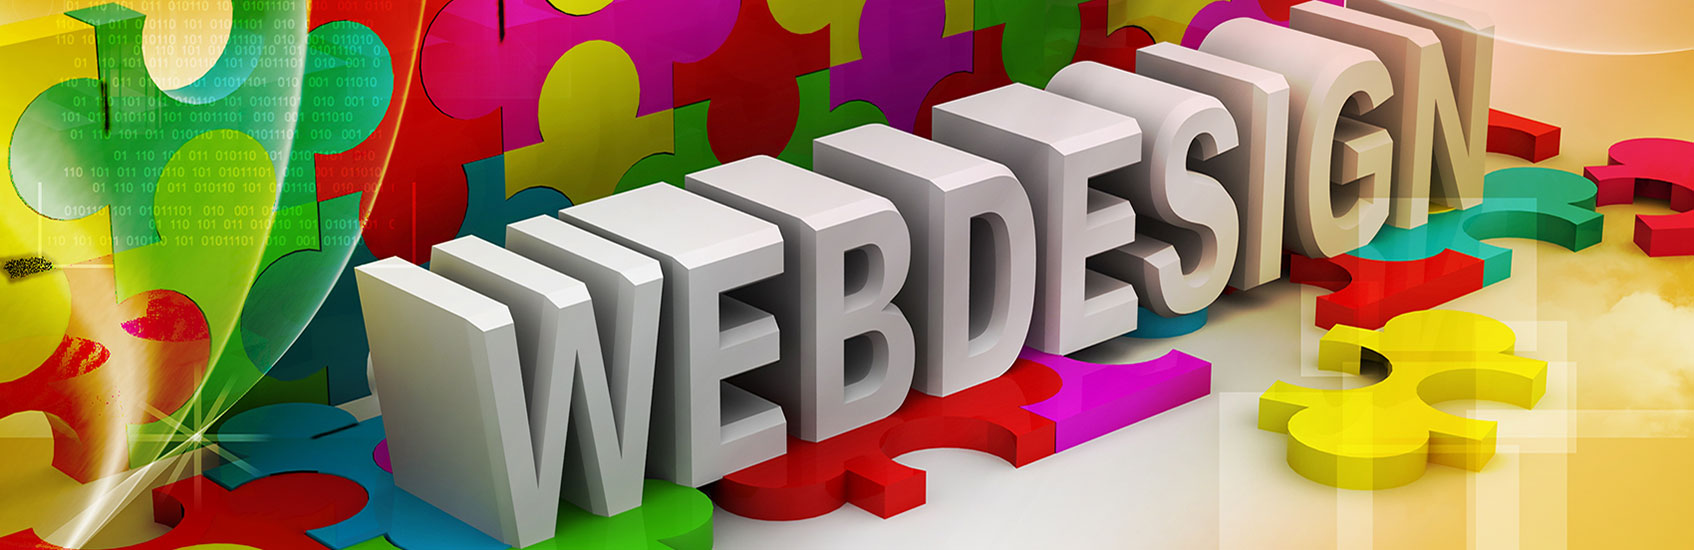 Kelowna Web Designers and Developers Affordable Web Design Ltd.